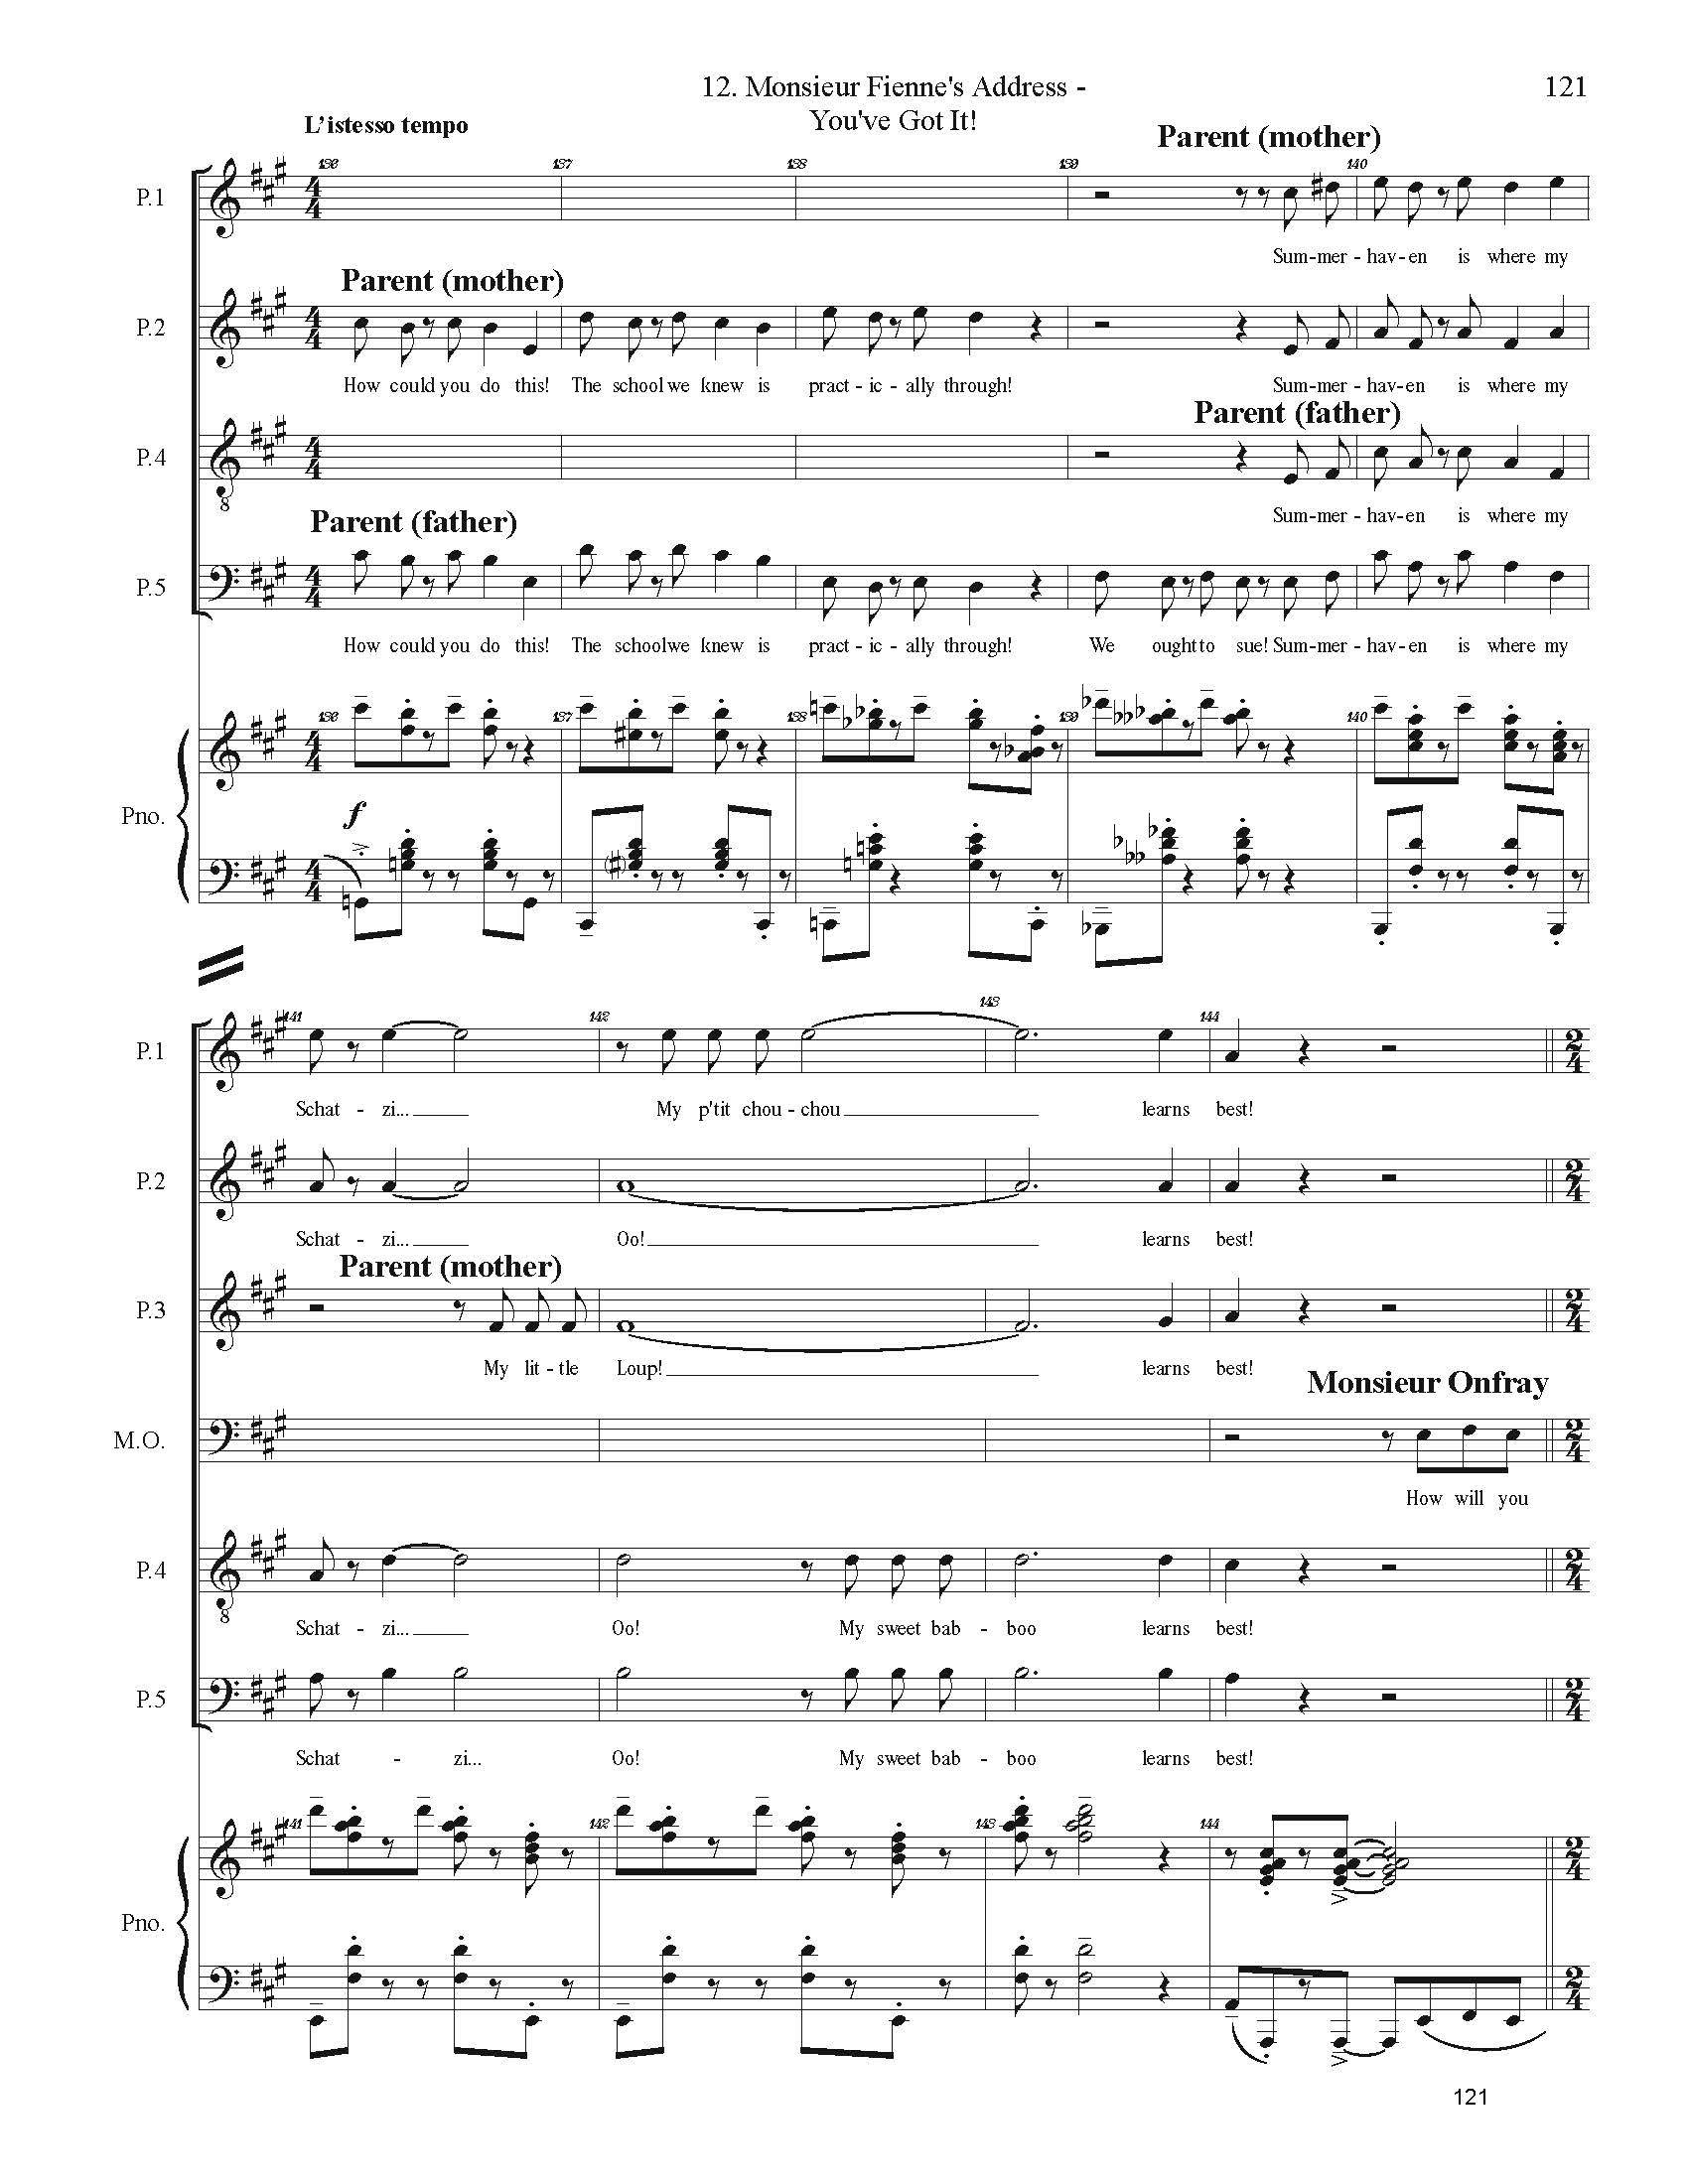 FULL PIANO VOCAL SCORE DRAFT 1 - Score_Page_121.jpg